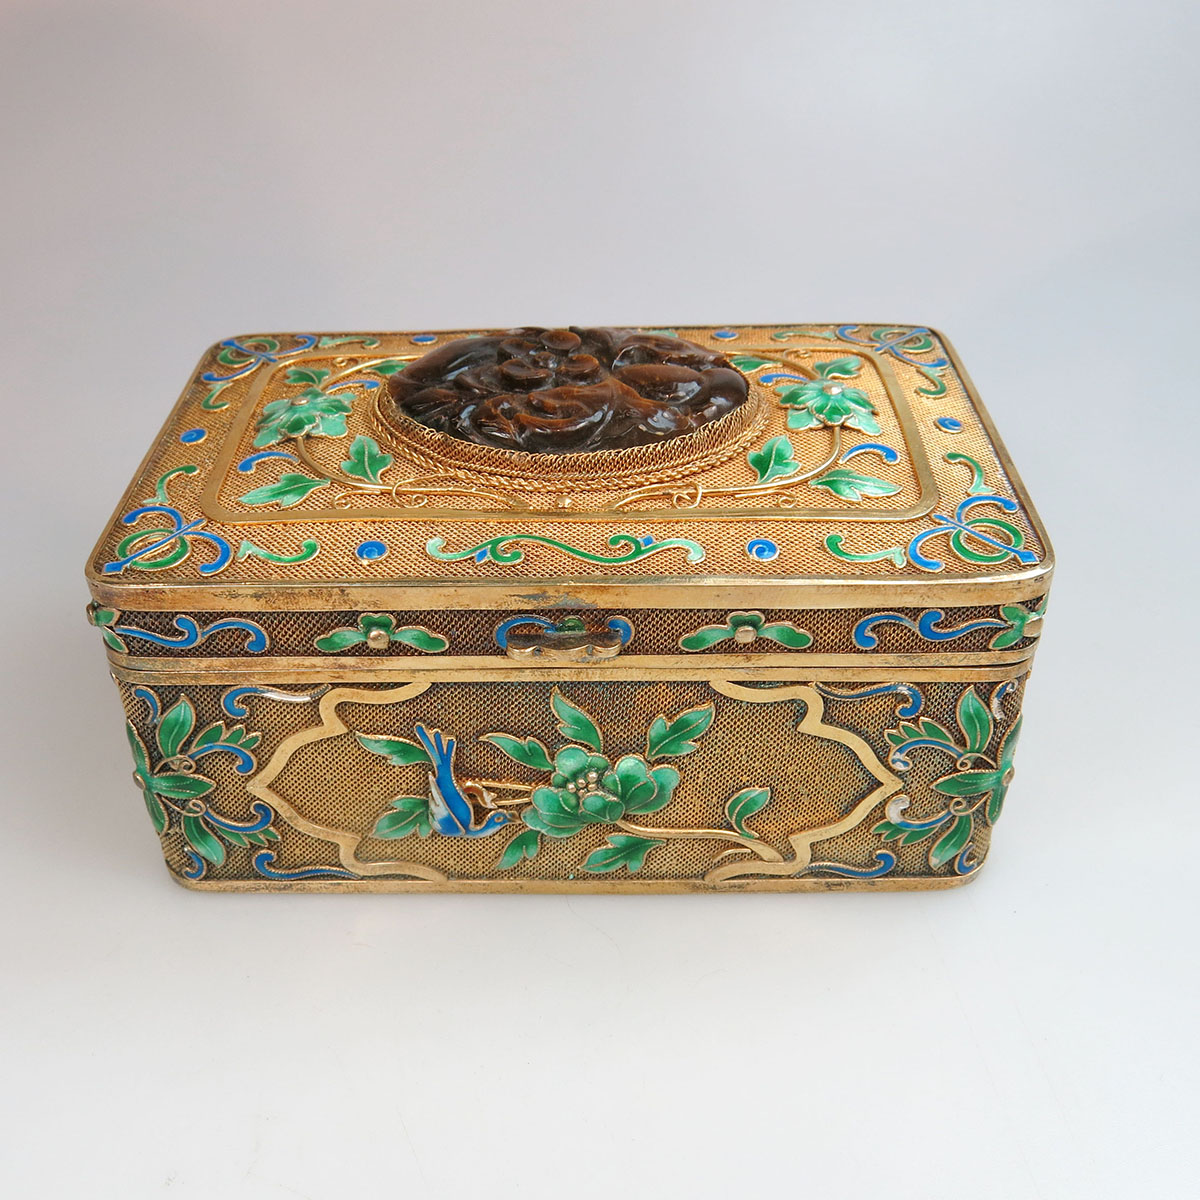 Chinese Silver Gilt Trinket Box